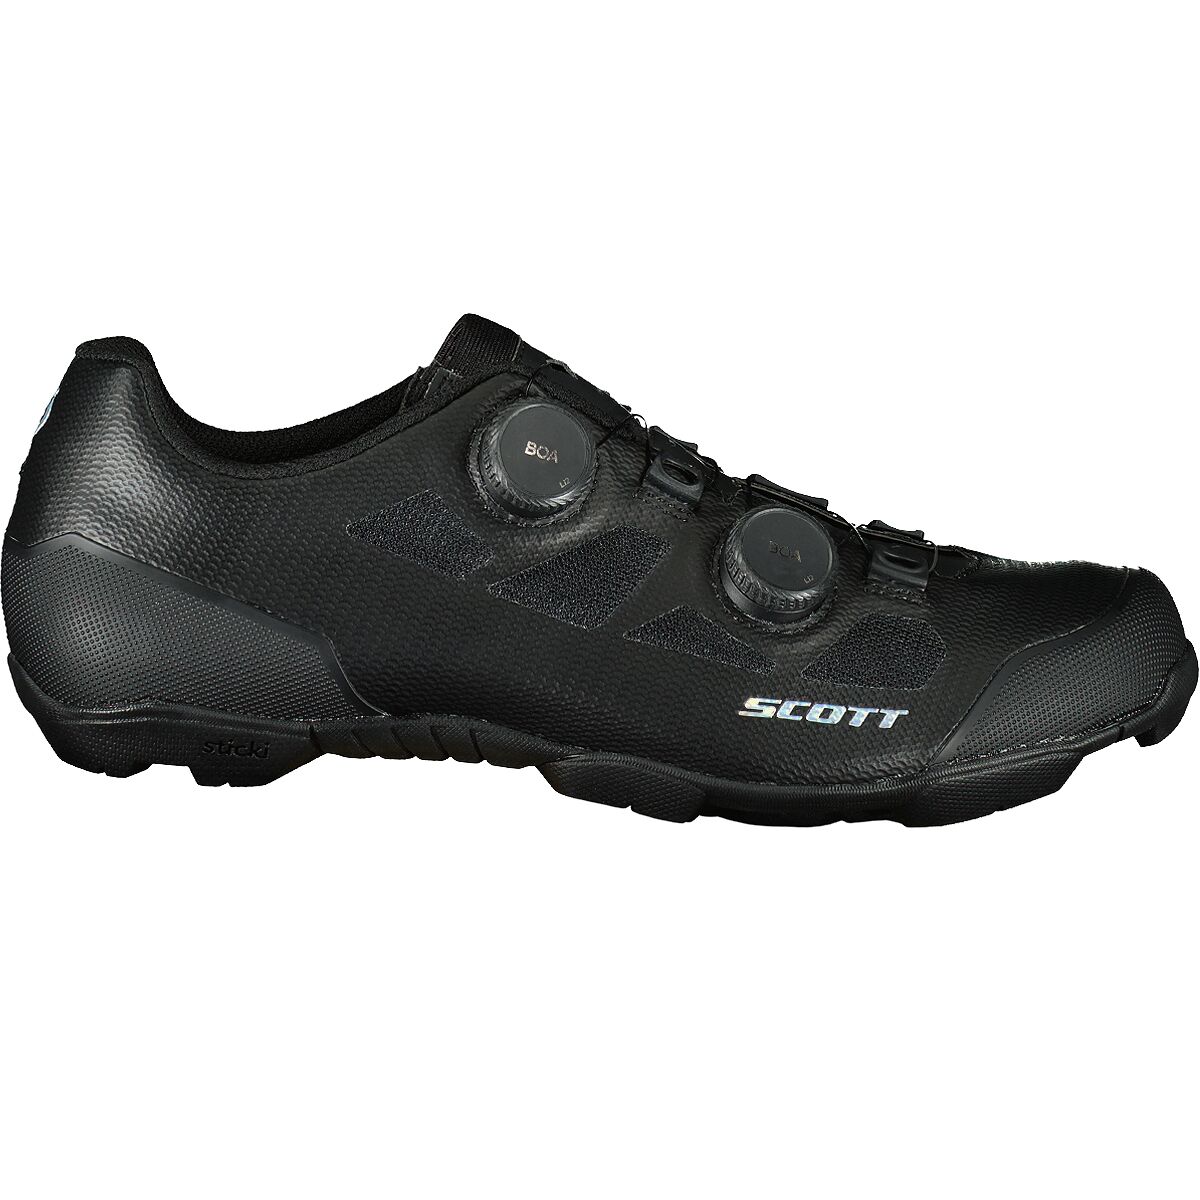 Scott MTB RC Evo Cycling Shoe - Men's